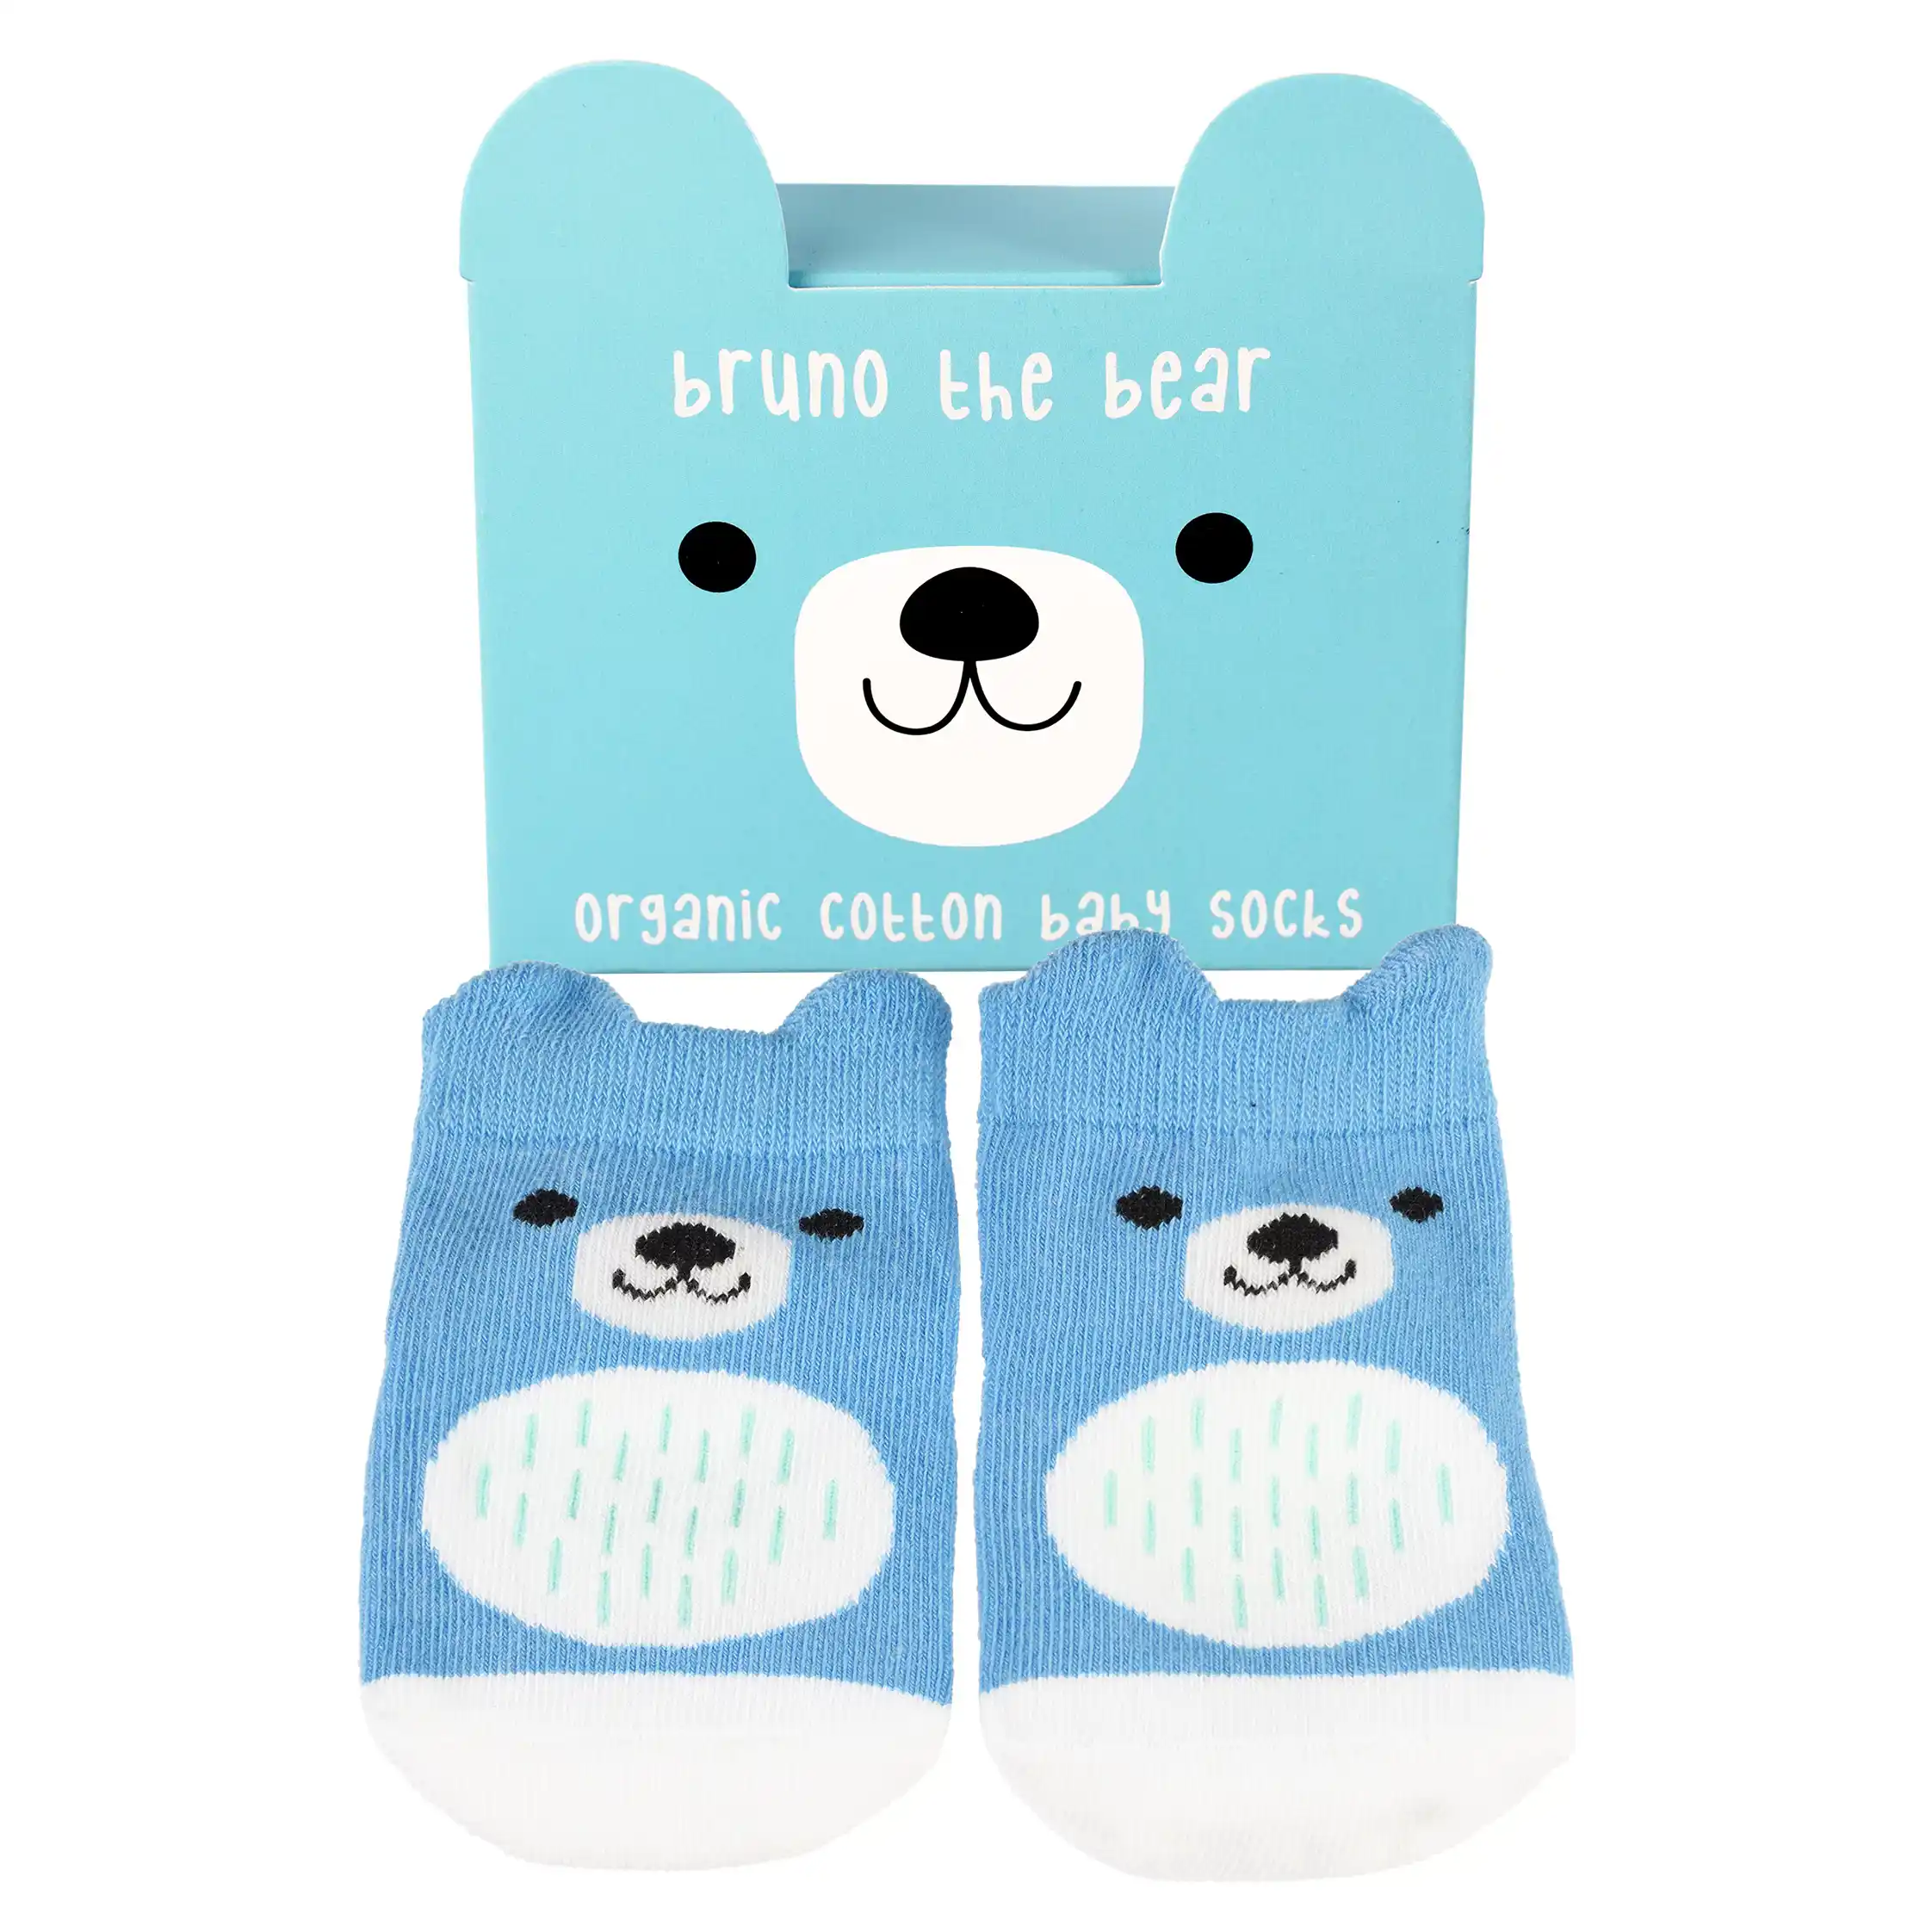 pair of baby socks - bruno the bear